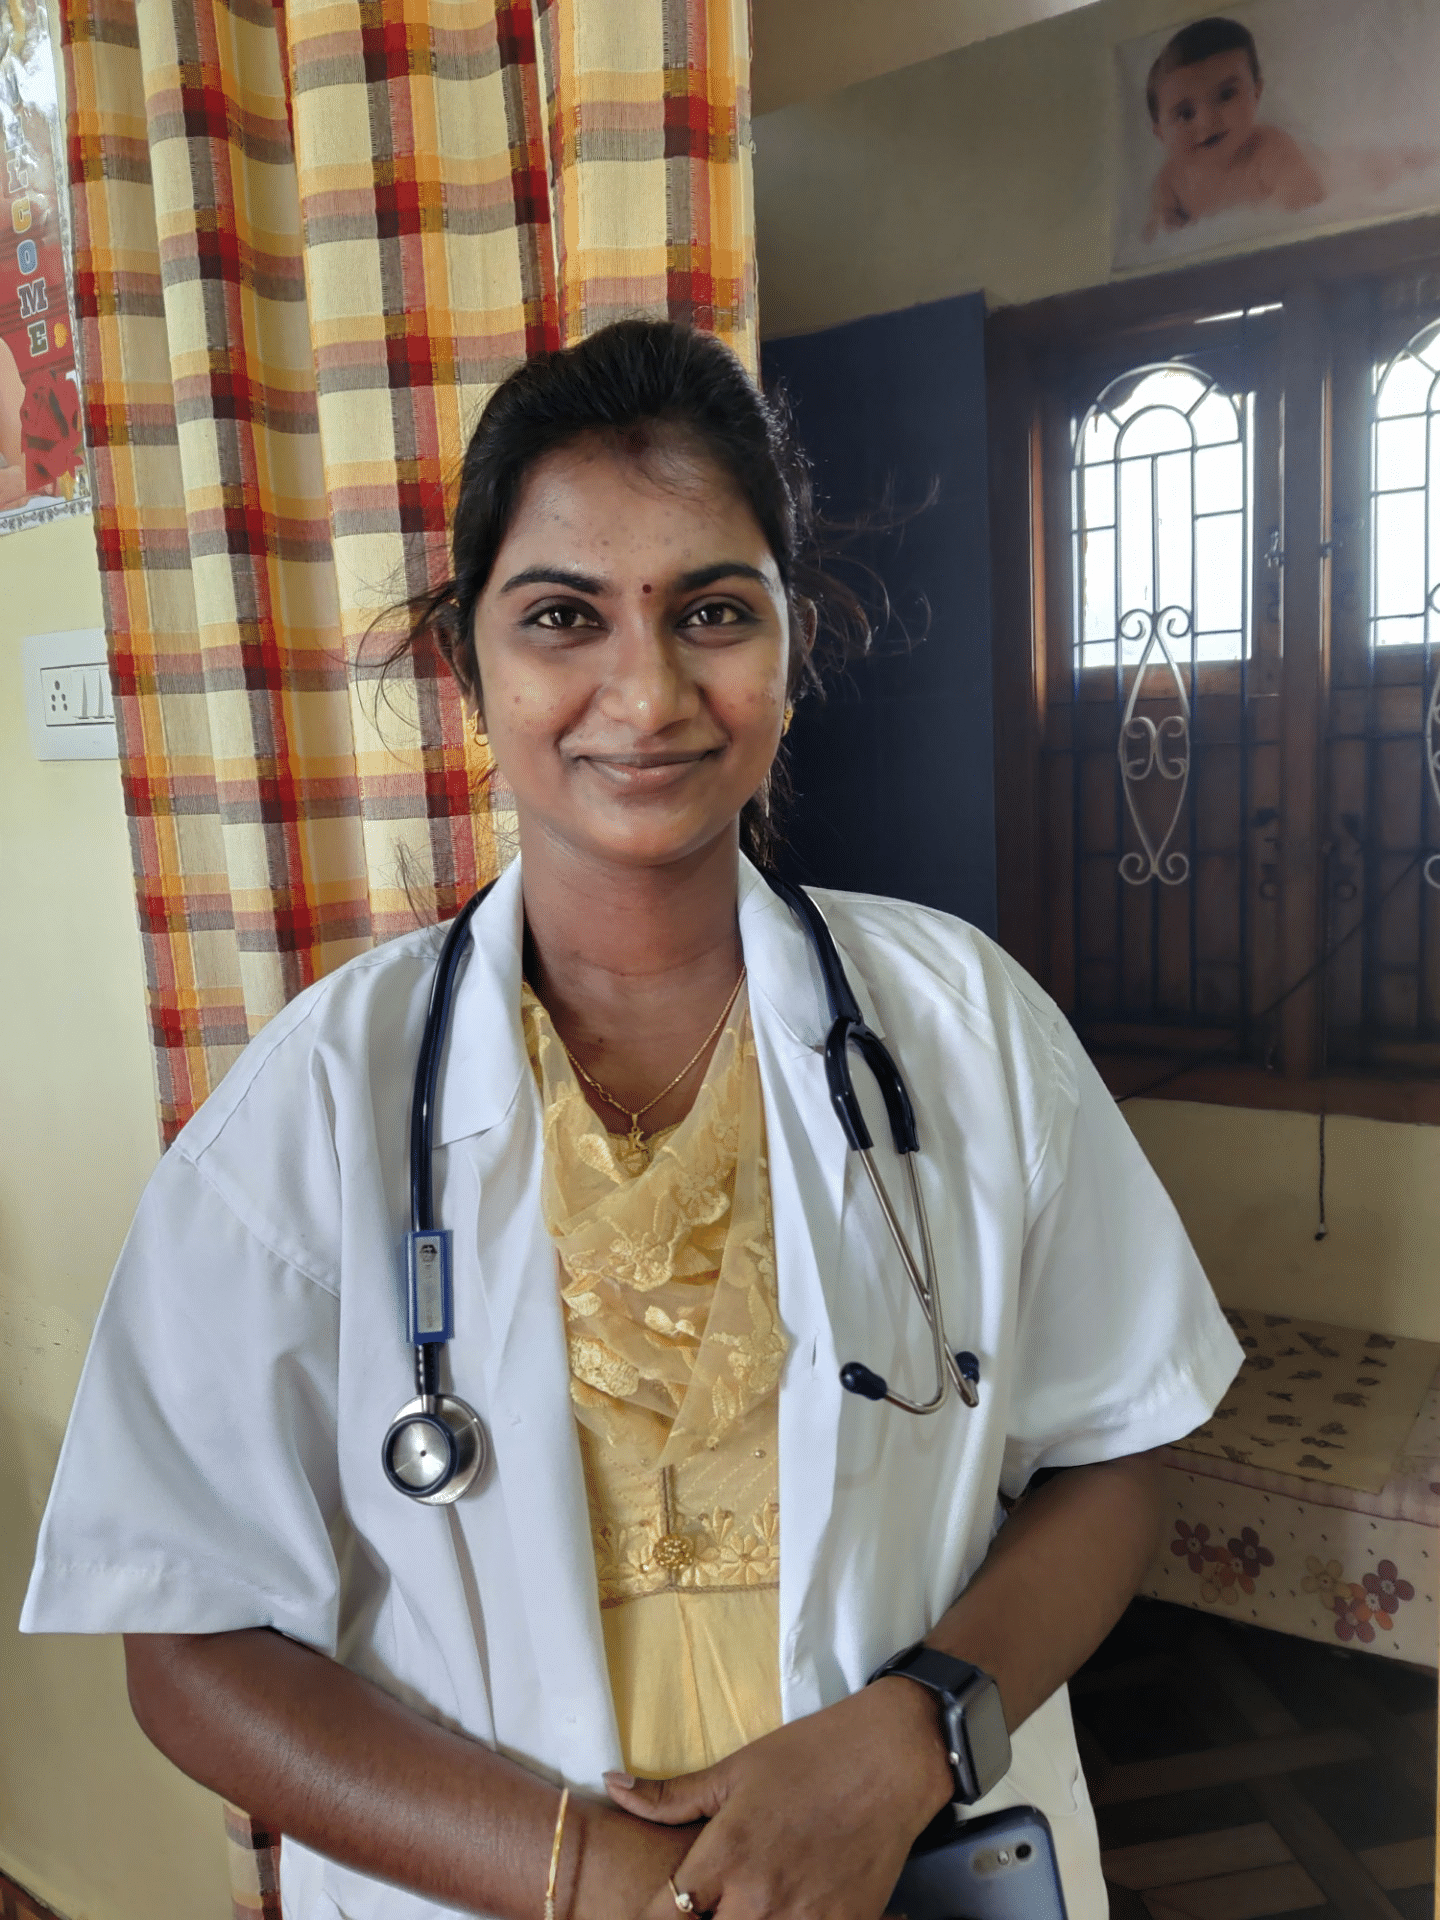 3 Best Dermatologist Doctors in Tirunelveli, TN - ThreeBestRated